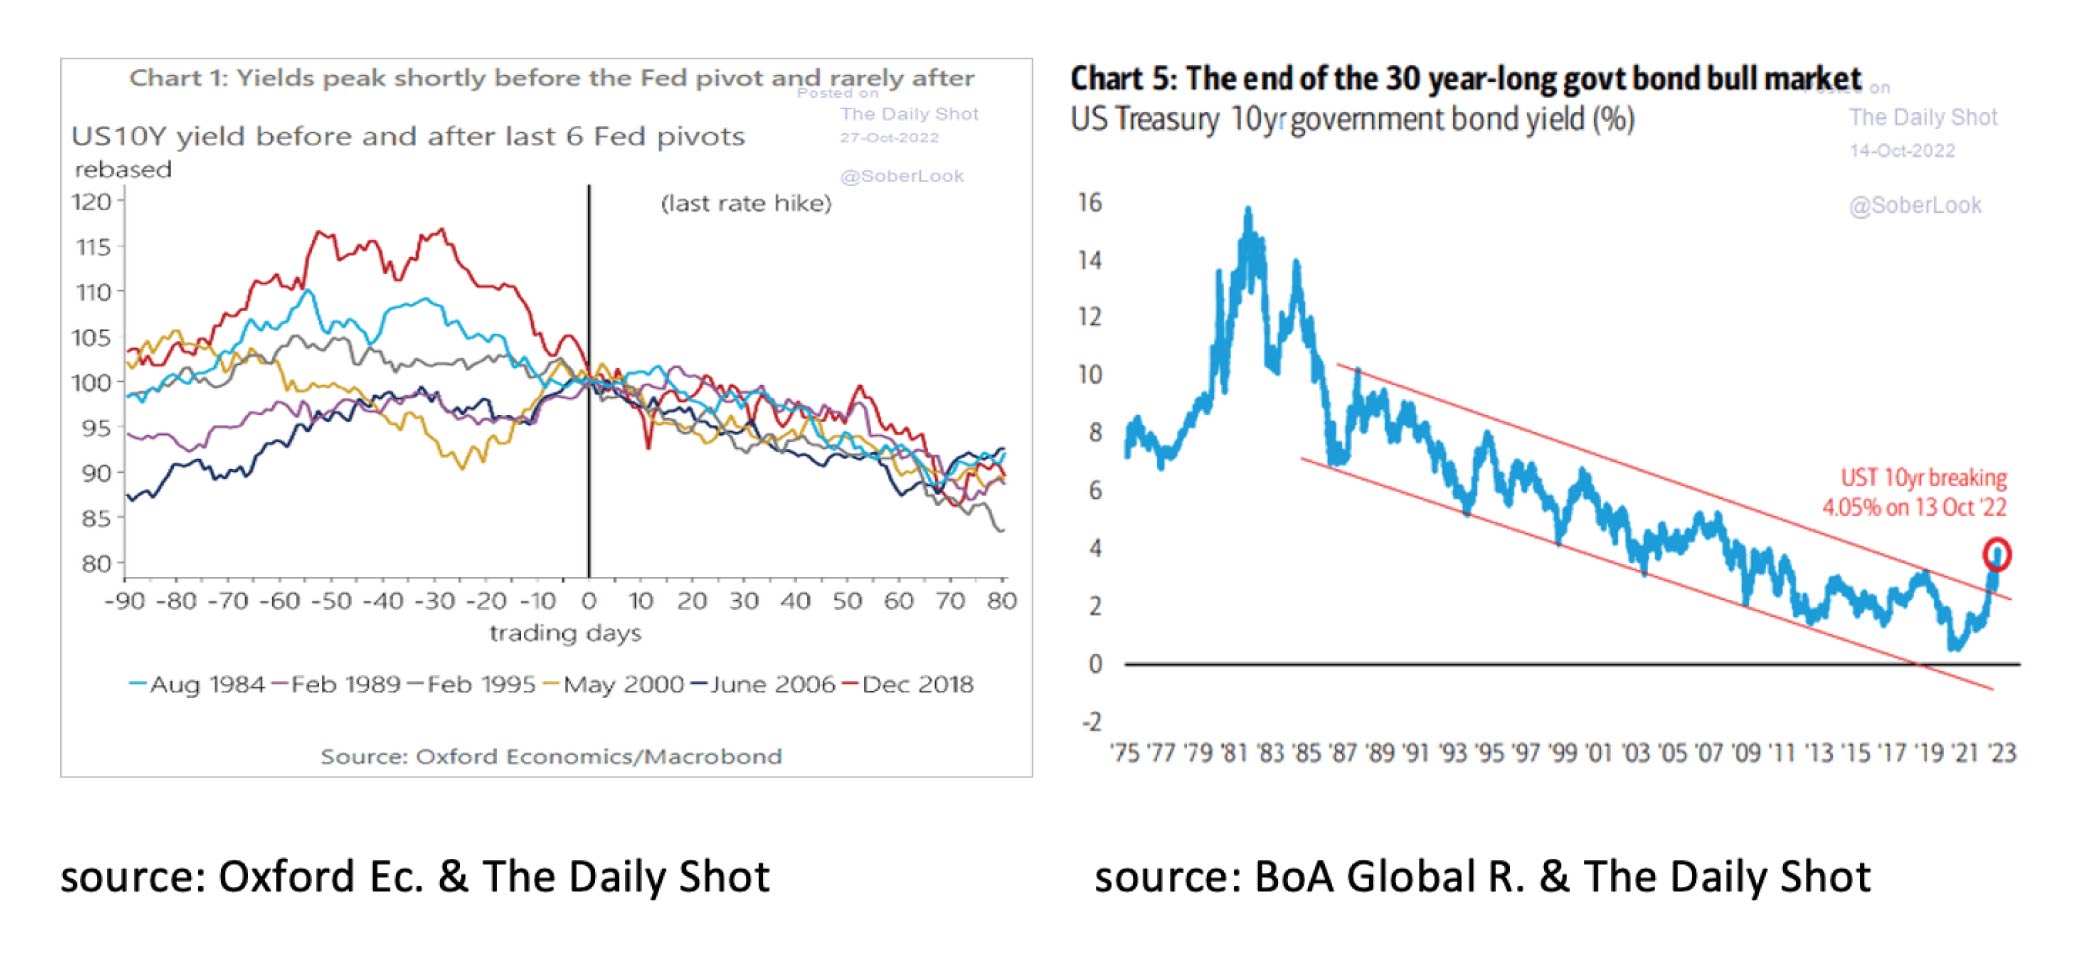 the end of the 30 year-long govt bond bull market